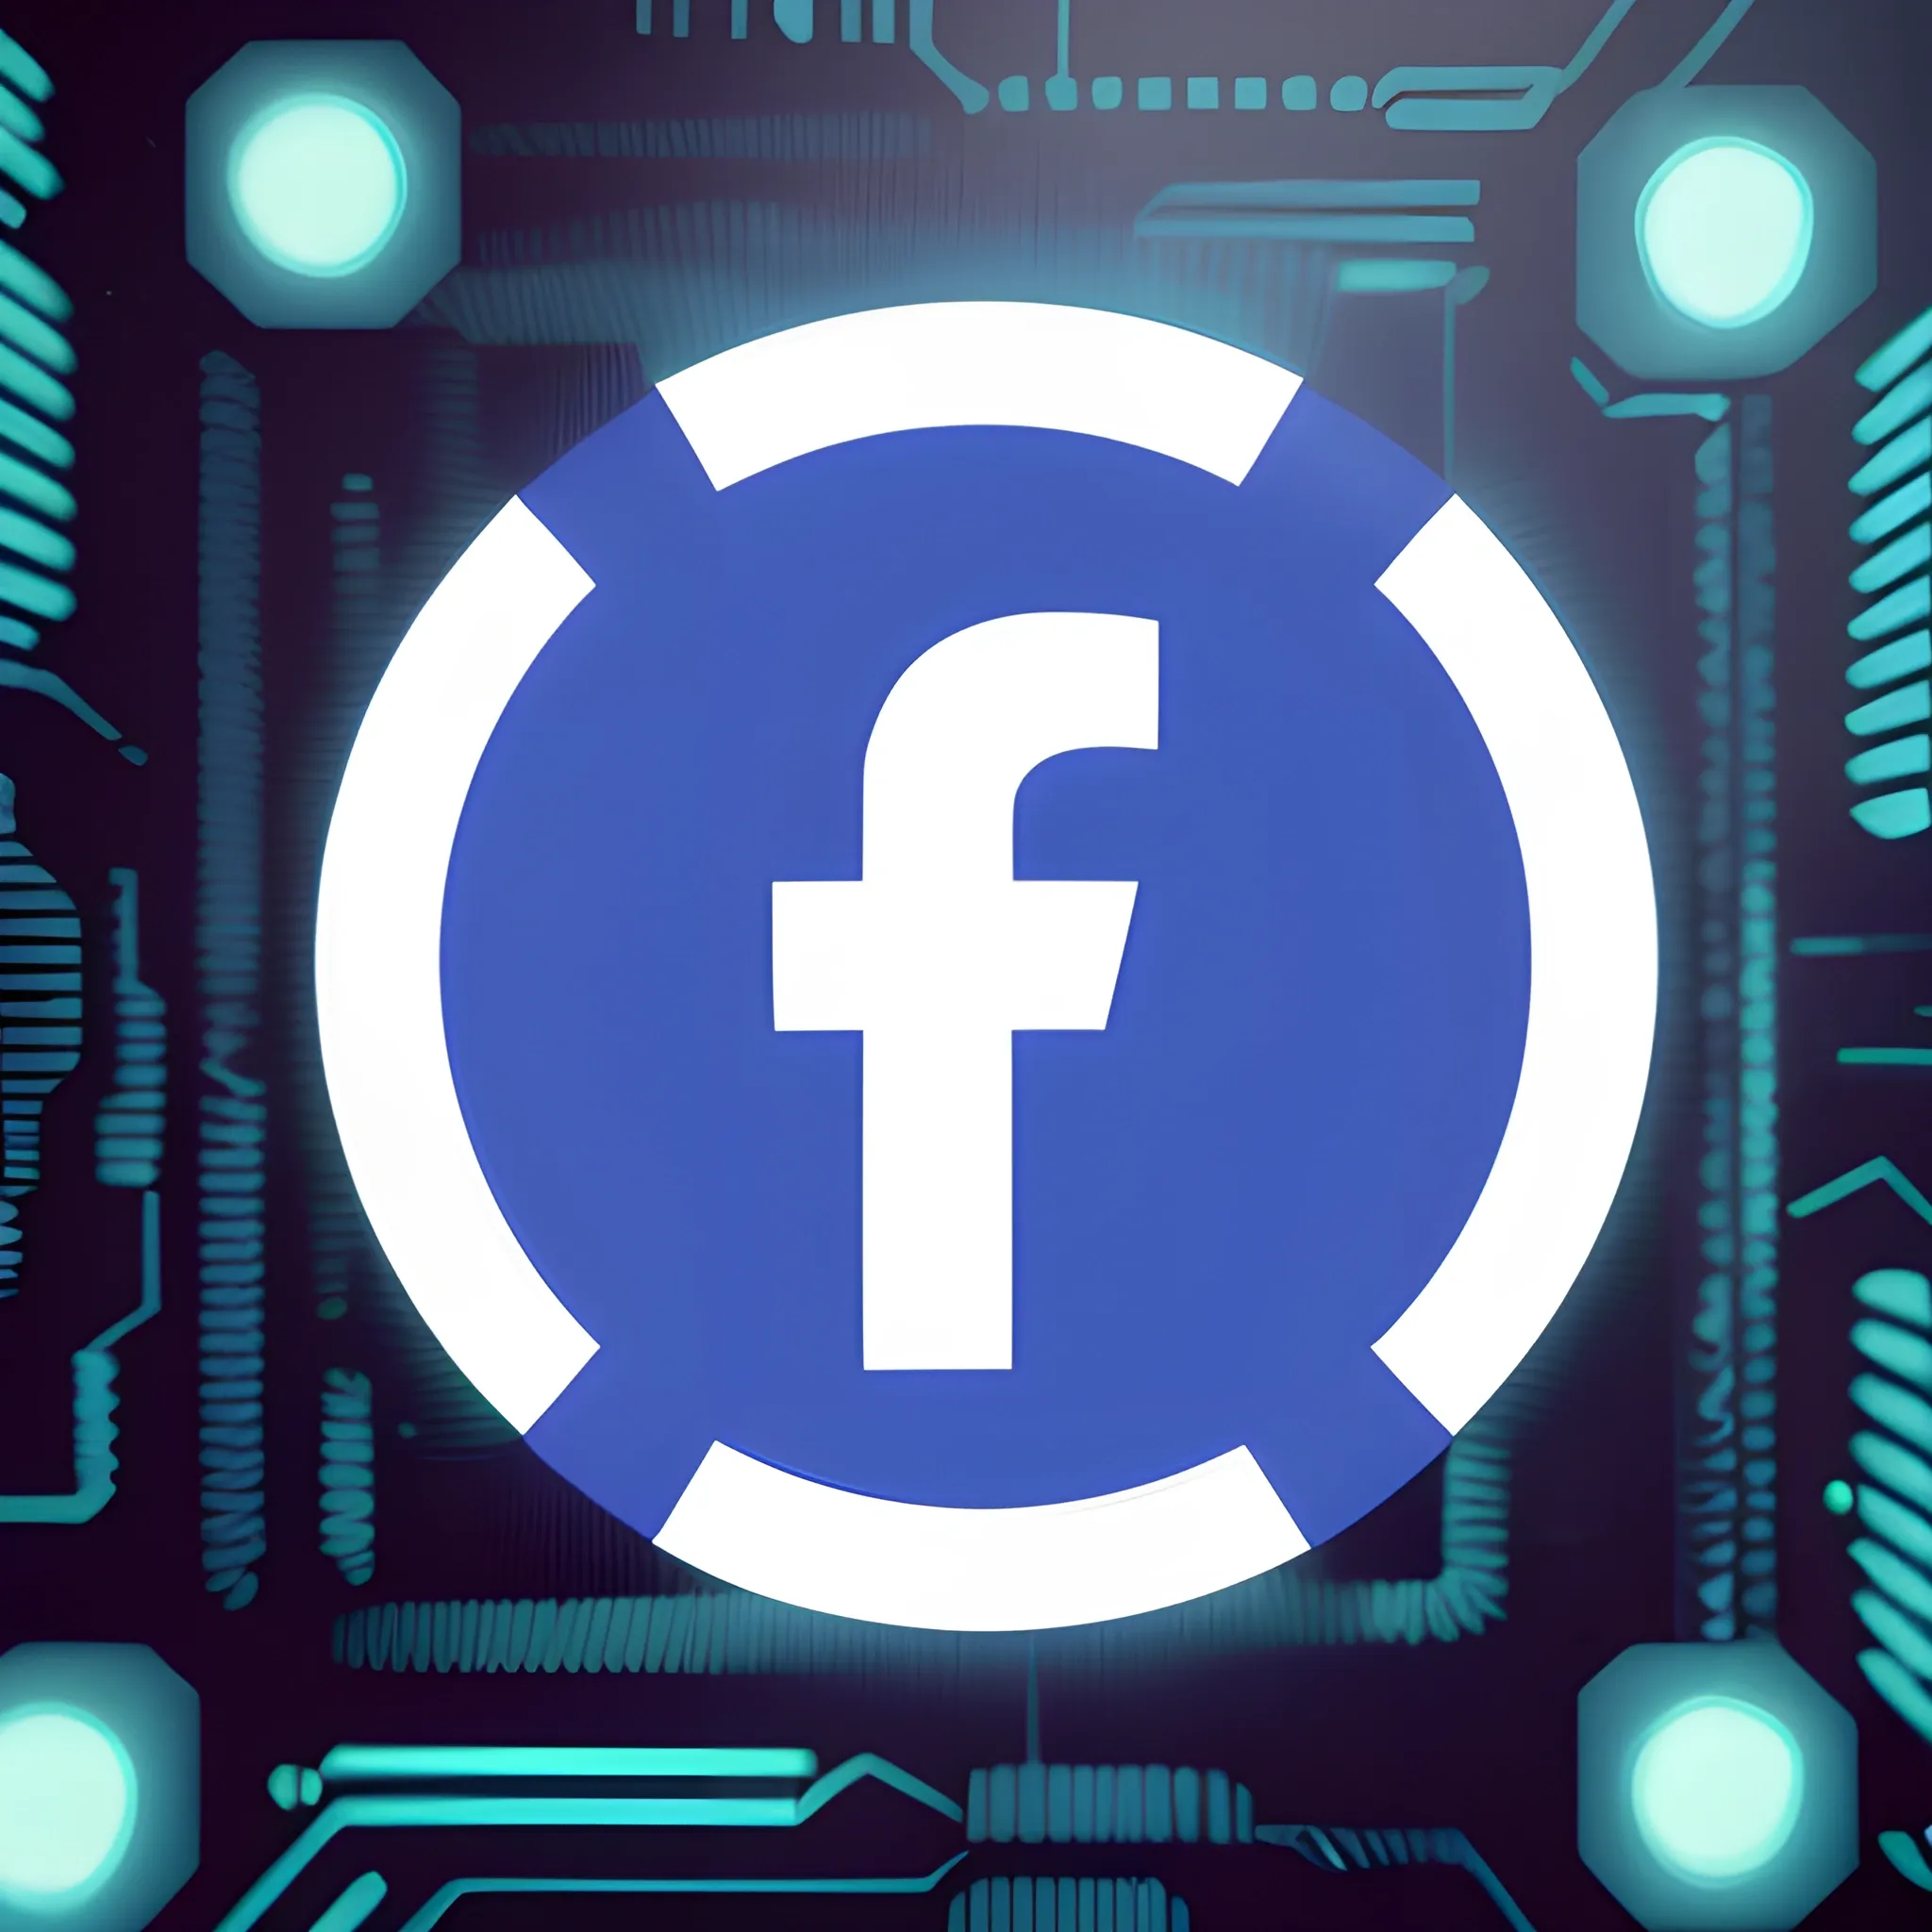 facebook logo with cyberpunk style